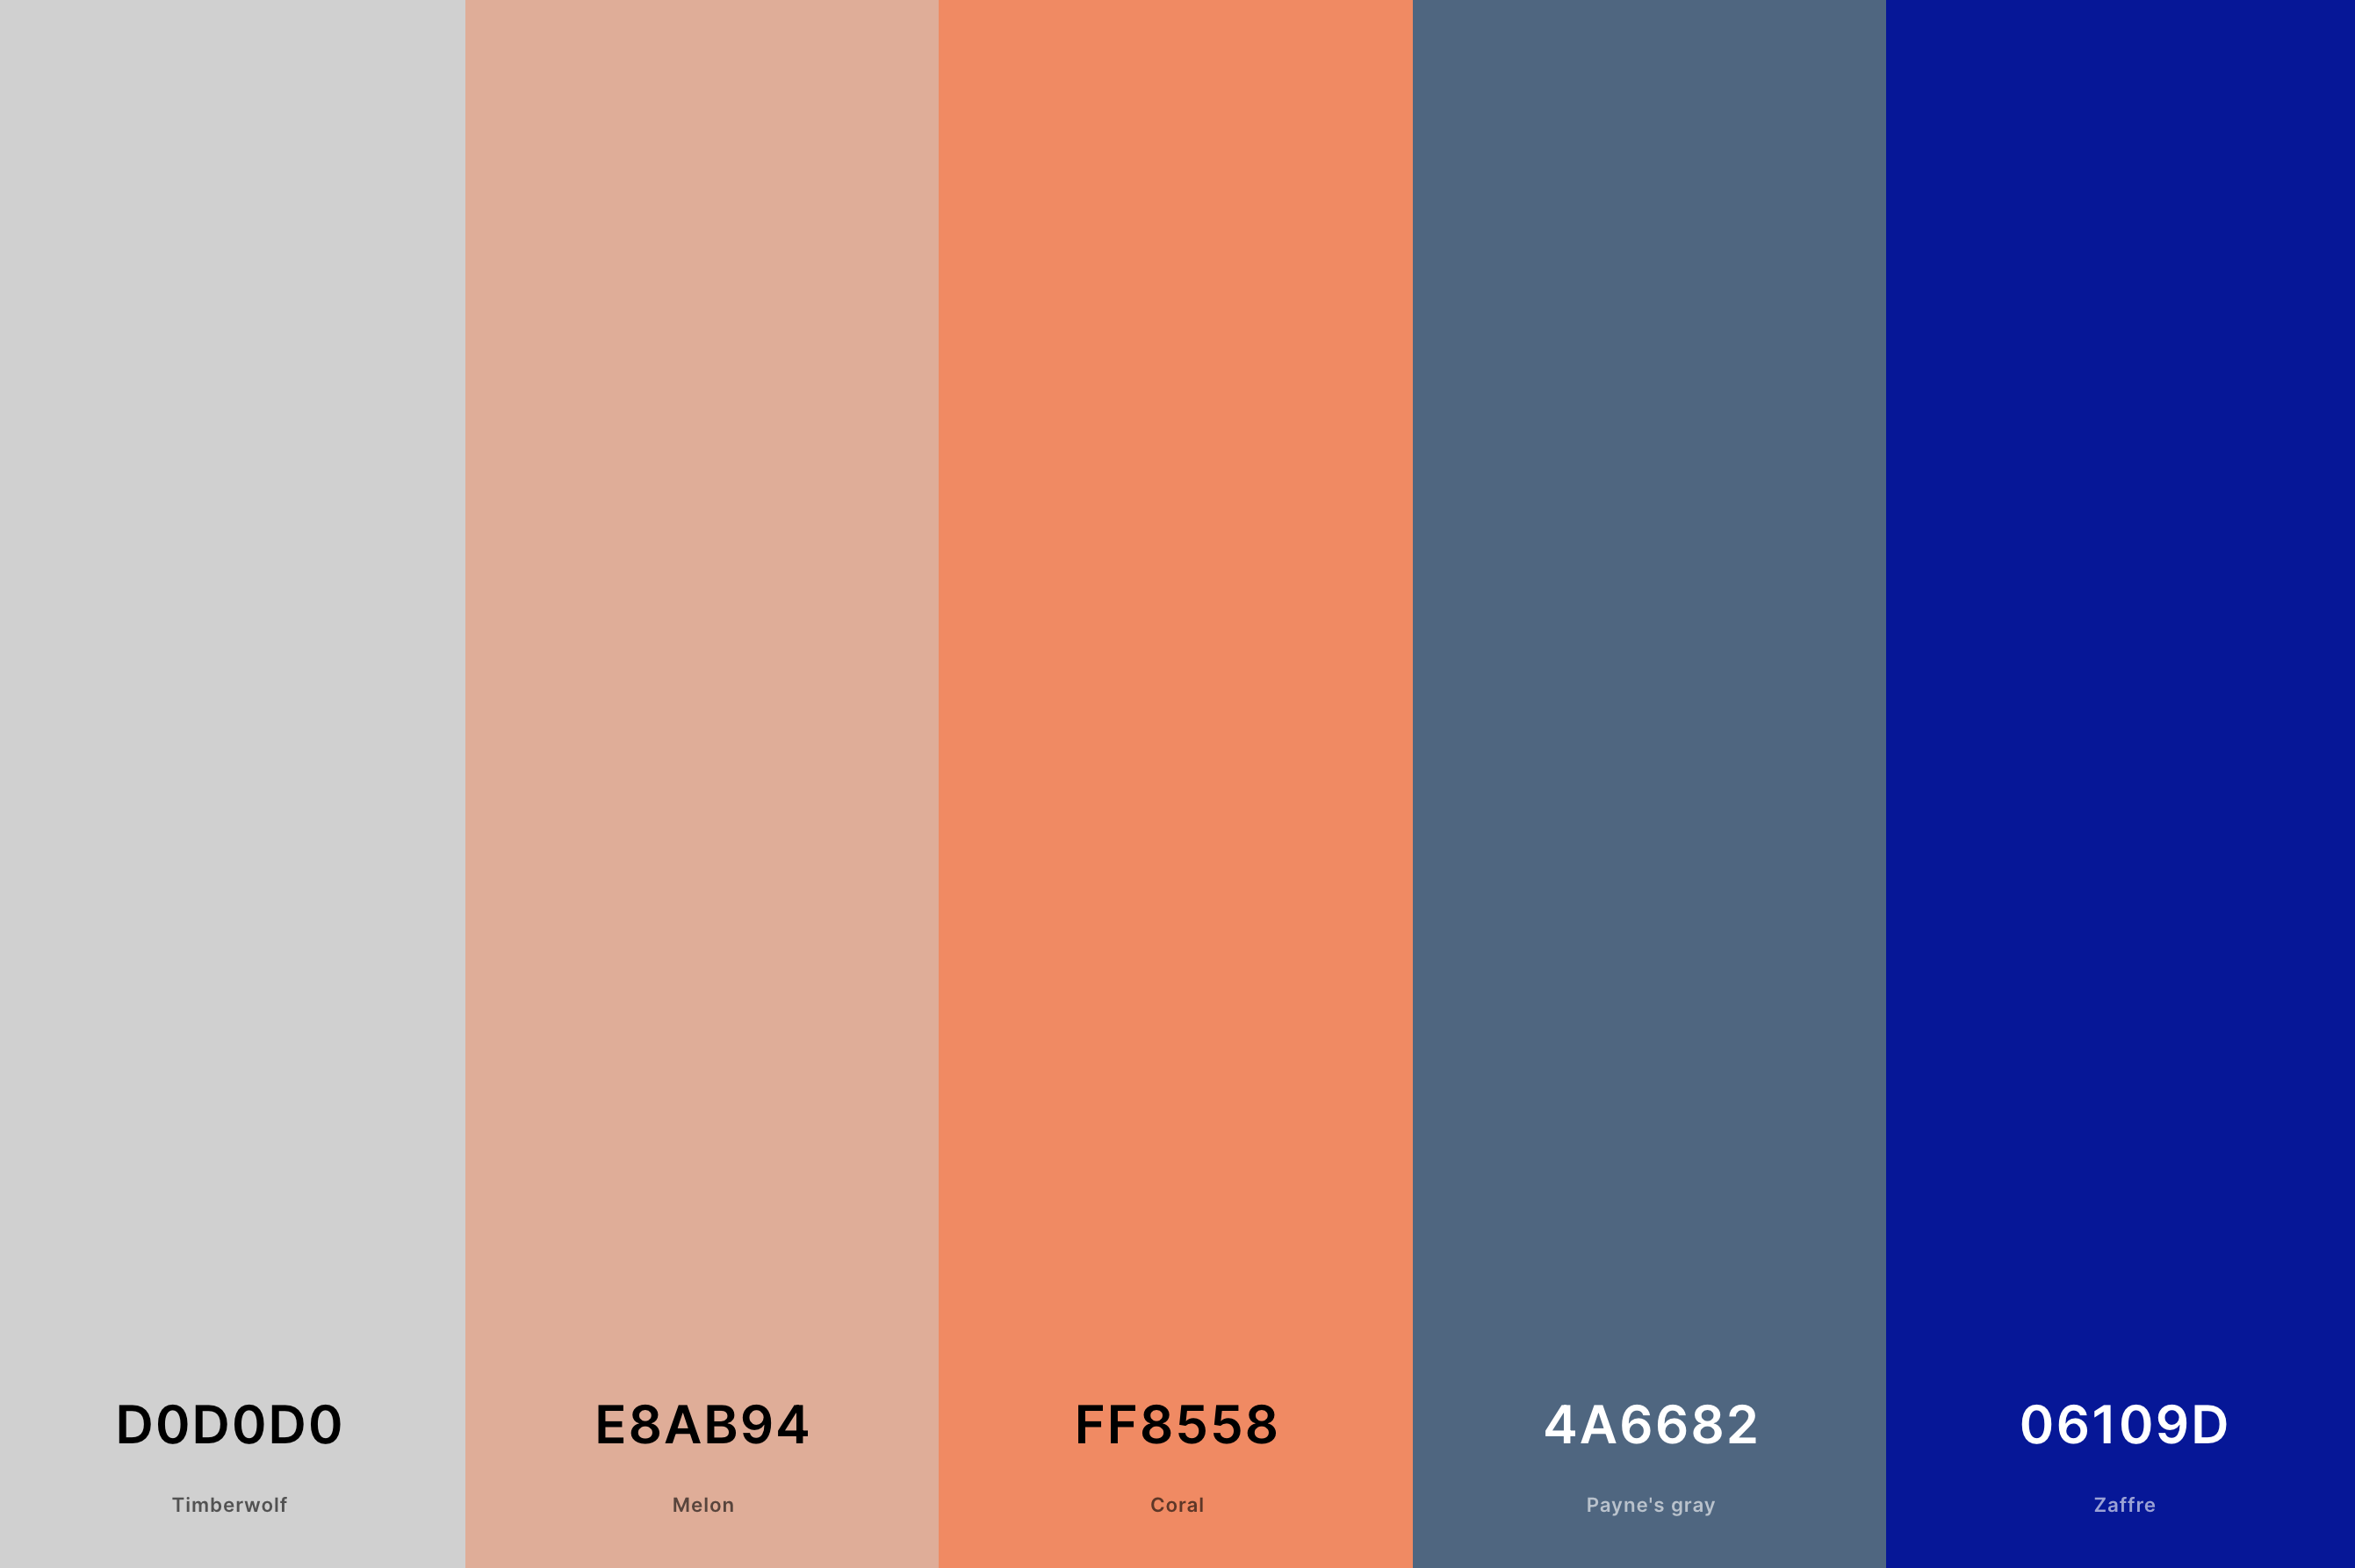 21. Blue, Gray And Coral Color Palette Color Palette with Timberwolf (Hex #D0D0D0) + Melon (Hex #E8AB94) + Coral (Hex #FF8558) + Payne'S Gray (Hex #4A6682) + Zaffre (Hex #06109D) Color Palette with Hex Codes